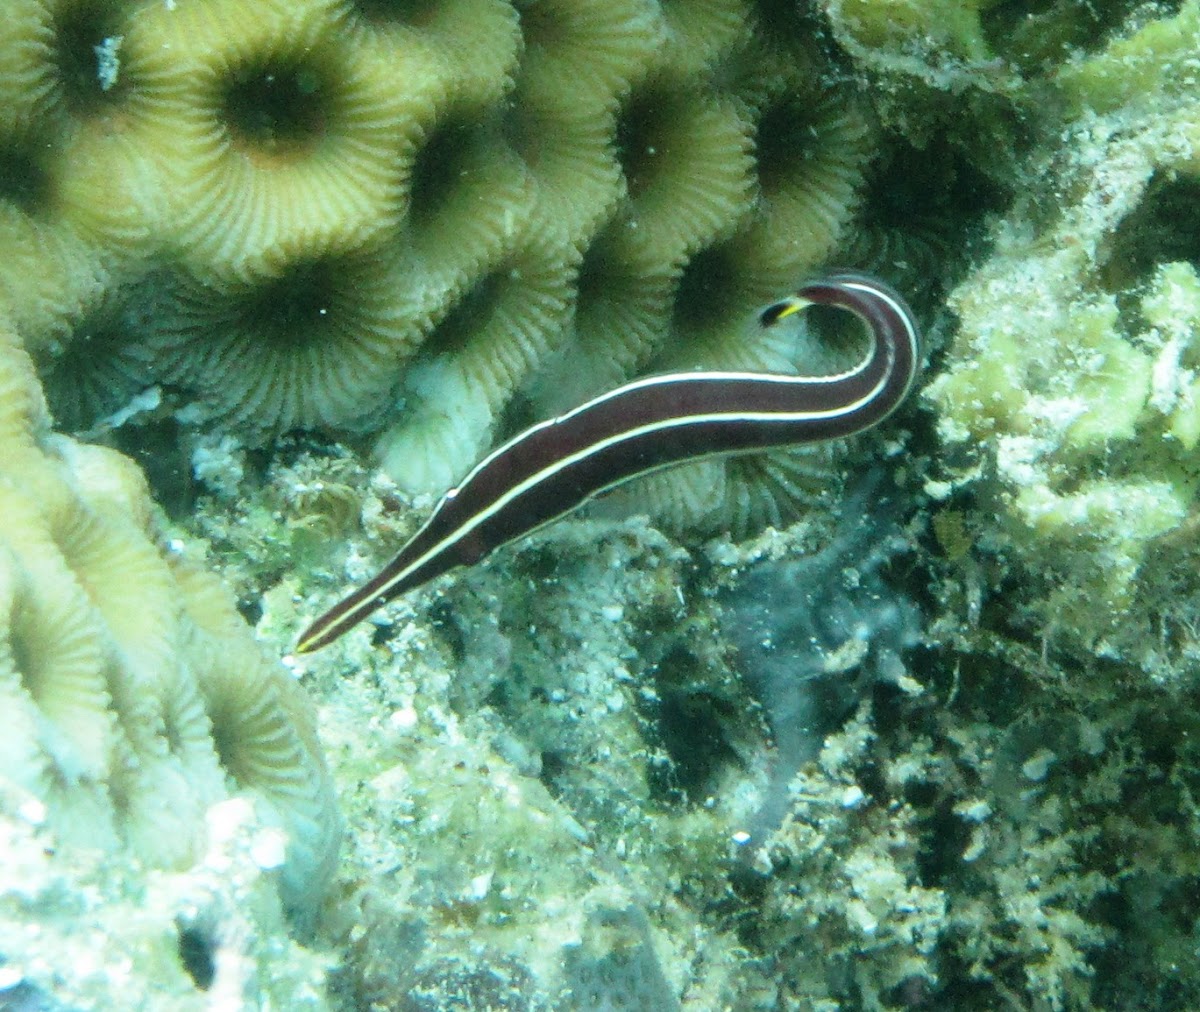 Long snout Clingfish